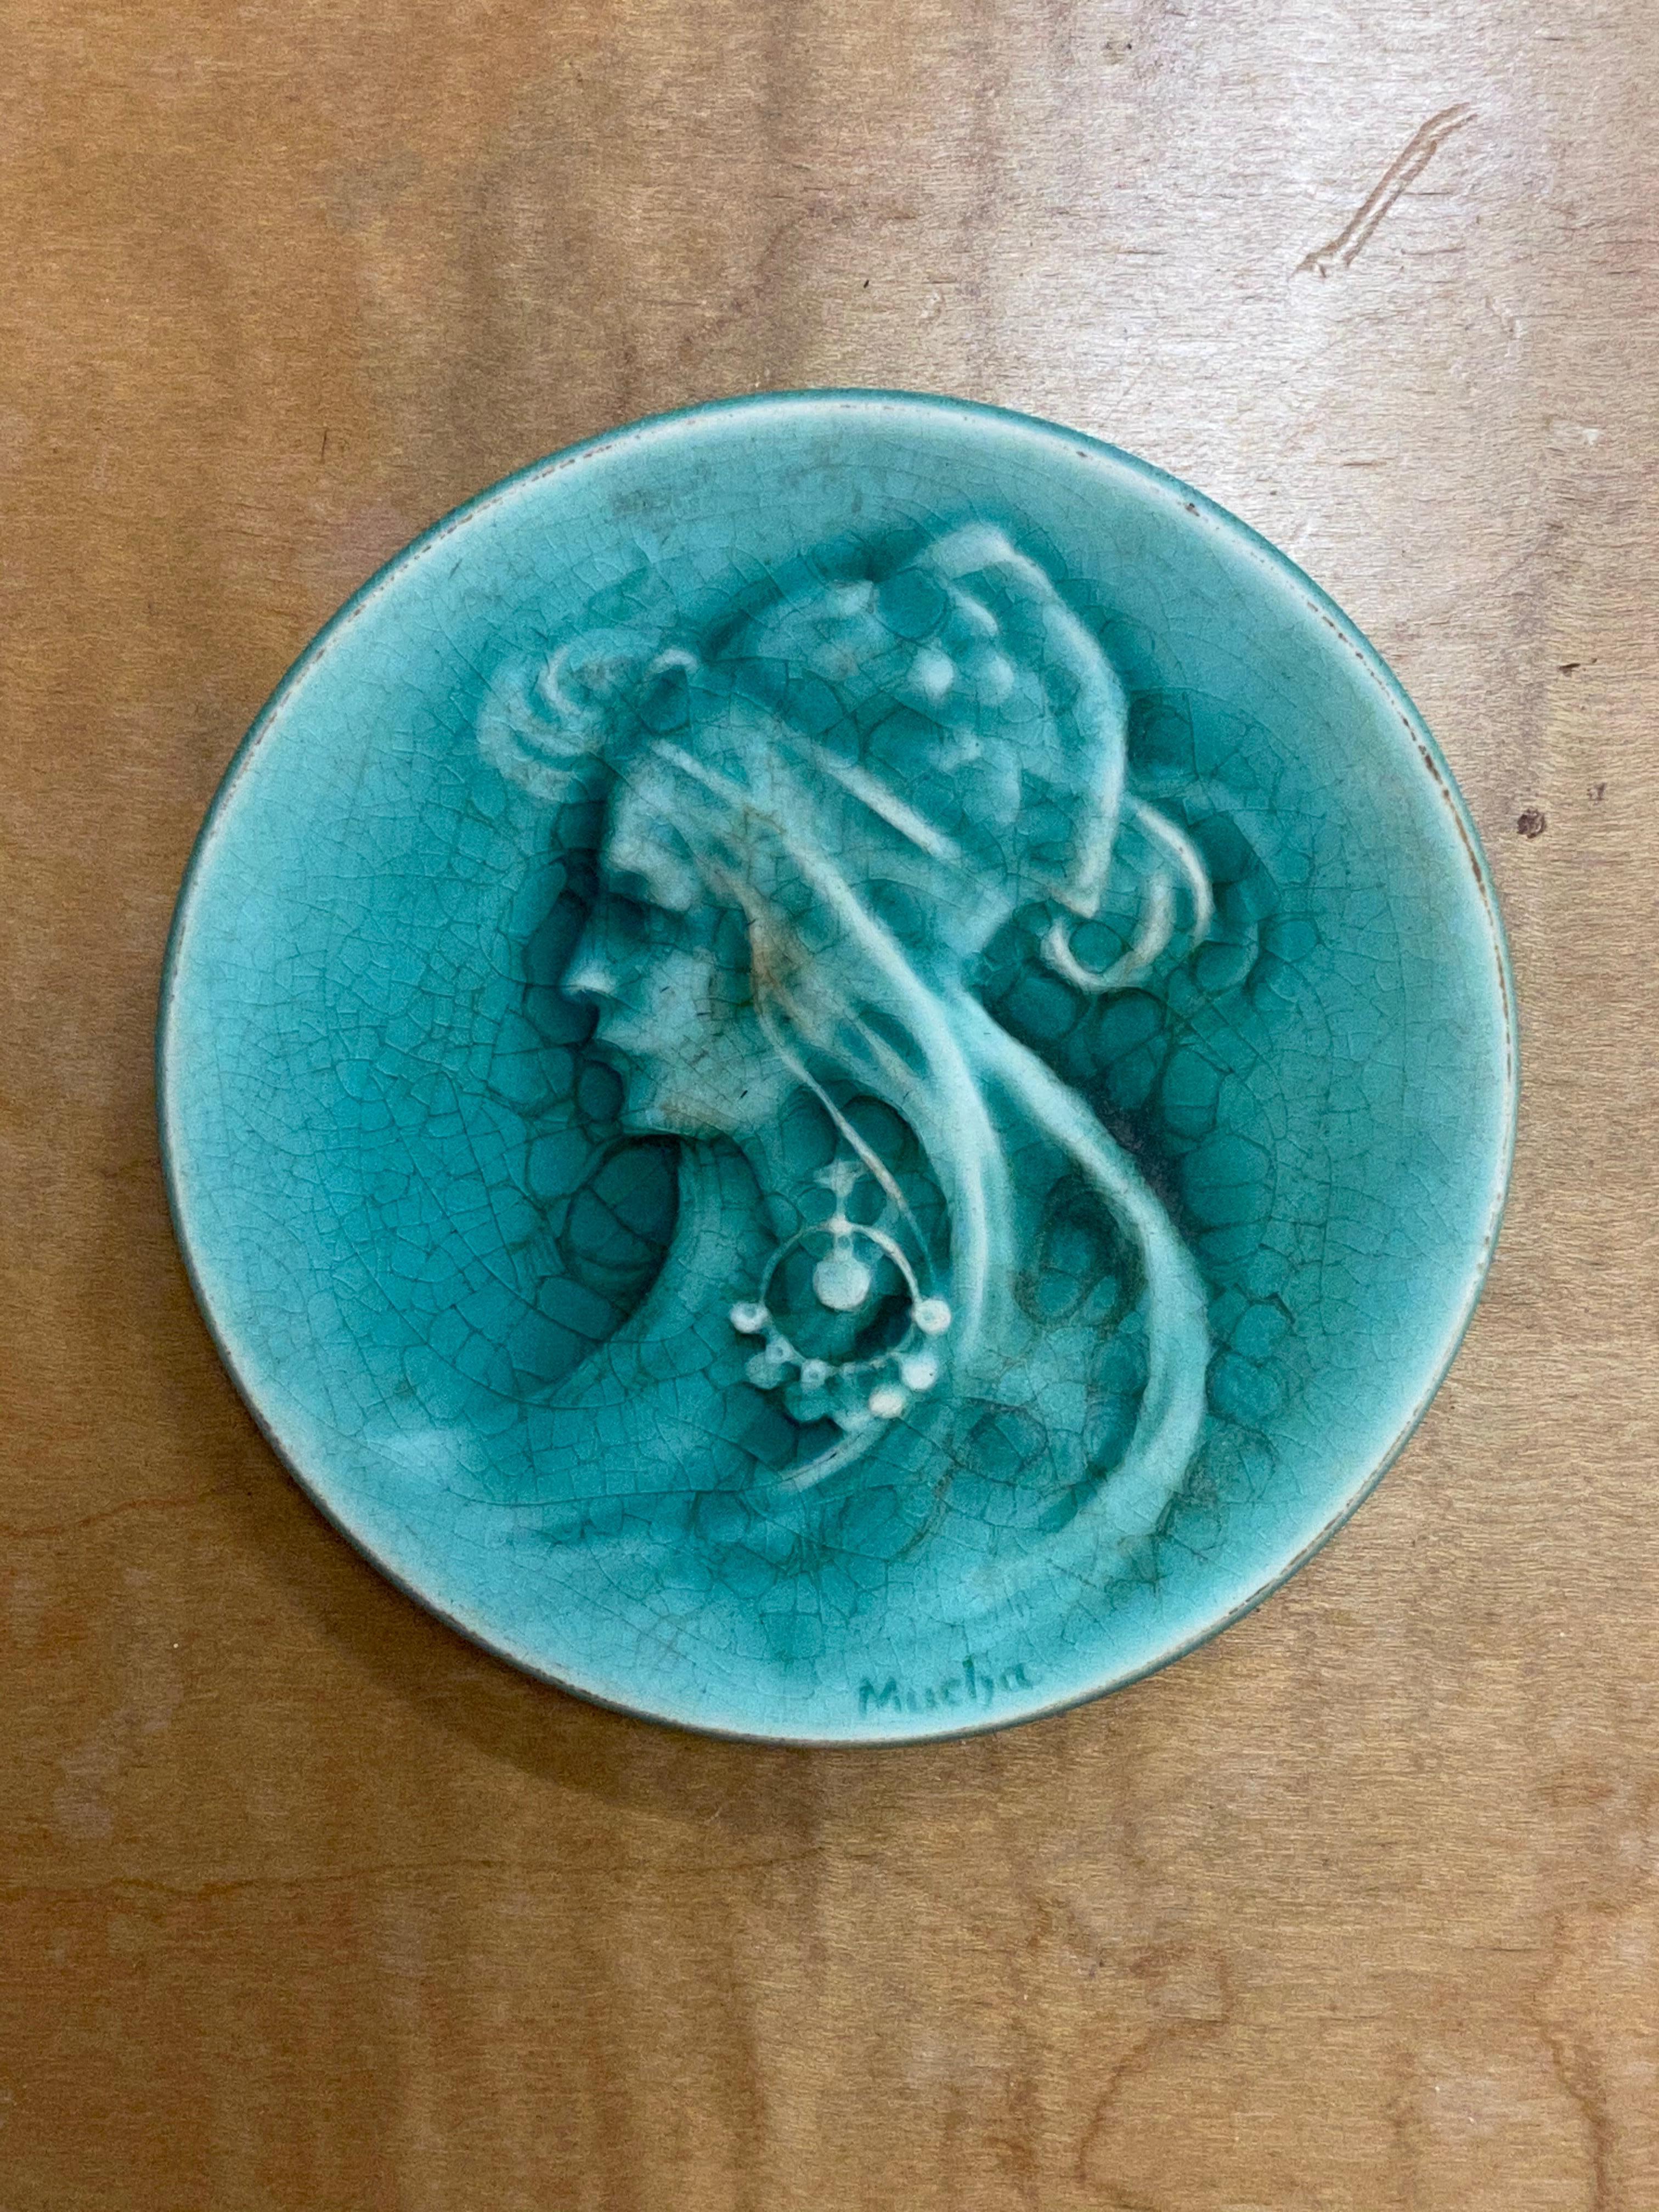 Mucha, Art Nouveau Ceramic Representing Sarah Bernard, Signed 